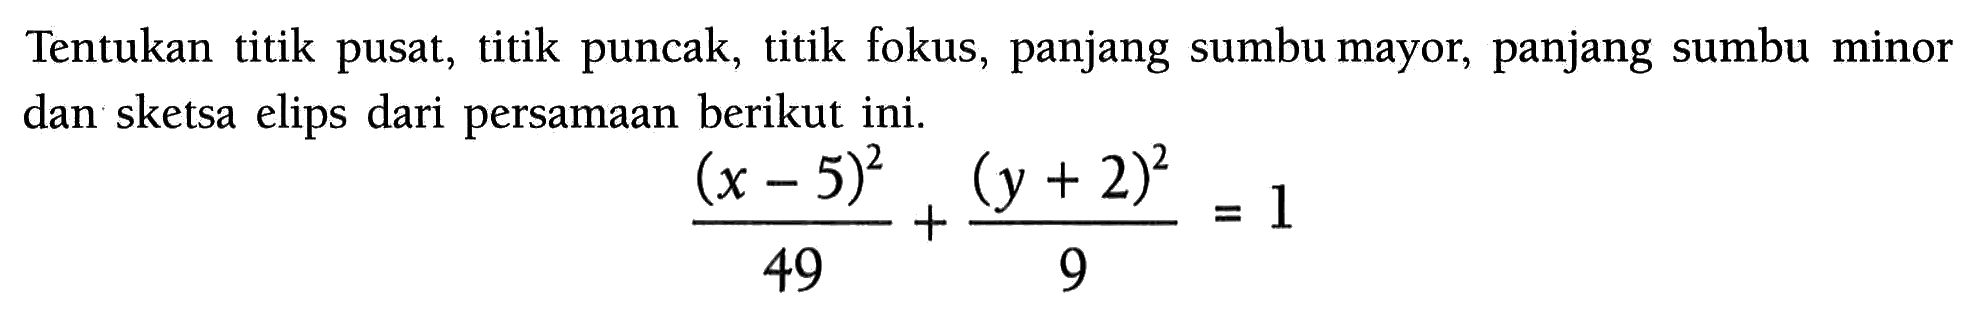 Tentukan titik pusat, titik puncak, titik fokus, panjang sumbu mayor, panjang sumbu minor dan' sketsa elips dari persamaan berikut ini. ((x-5)^2)/49+((y+2)^2)/9=1